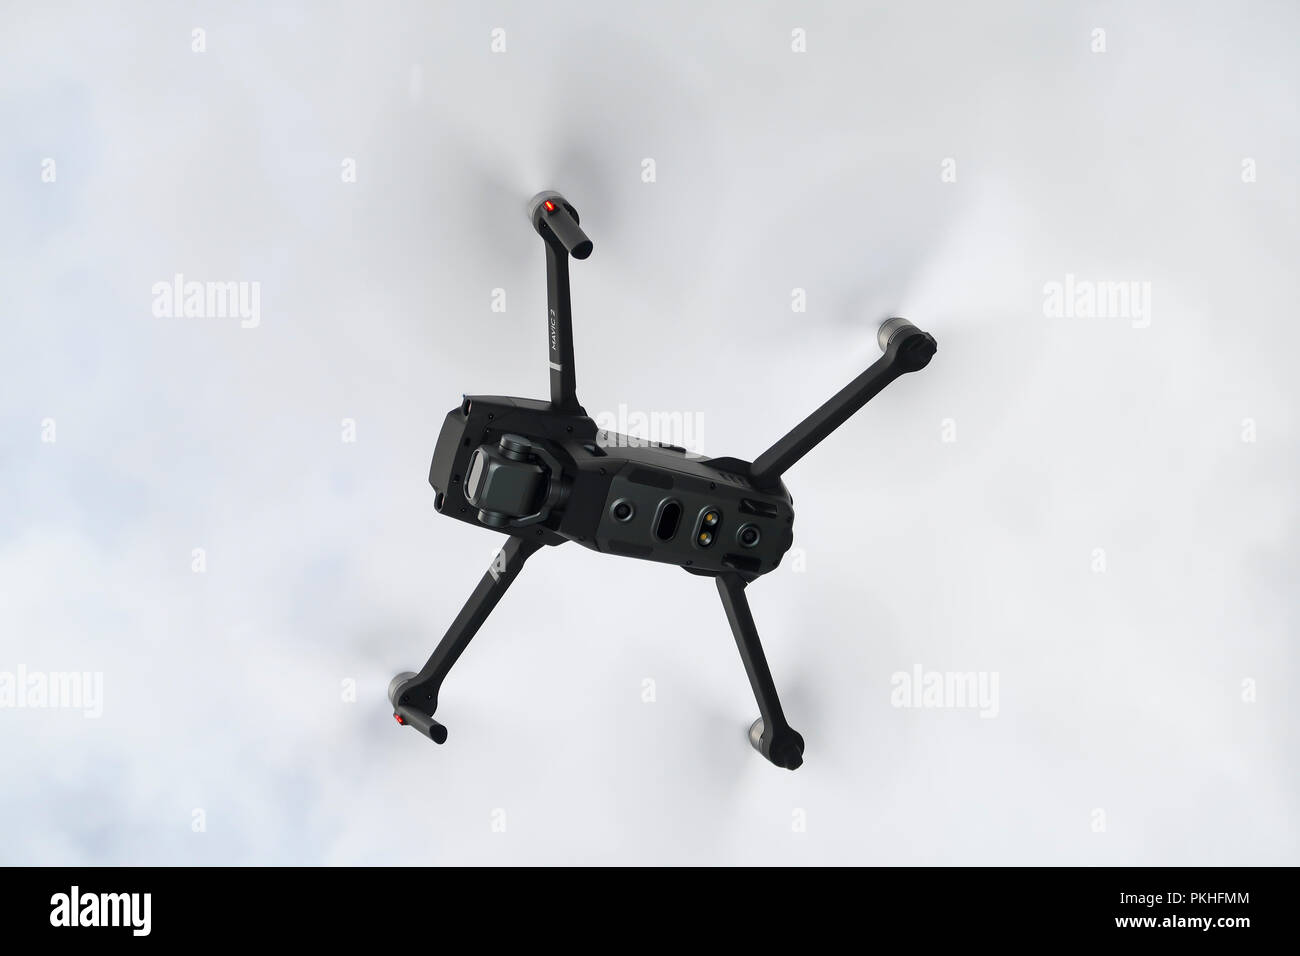 DJI Mavic 2 Pro drone Stock Photo